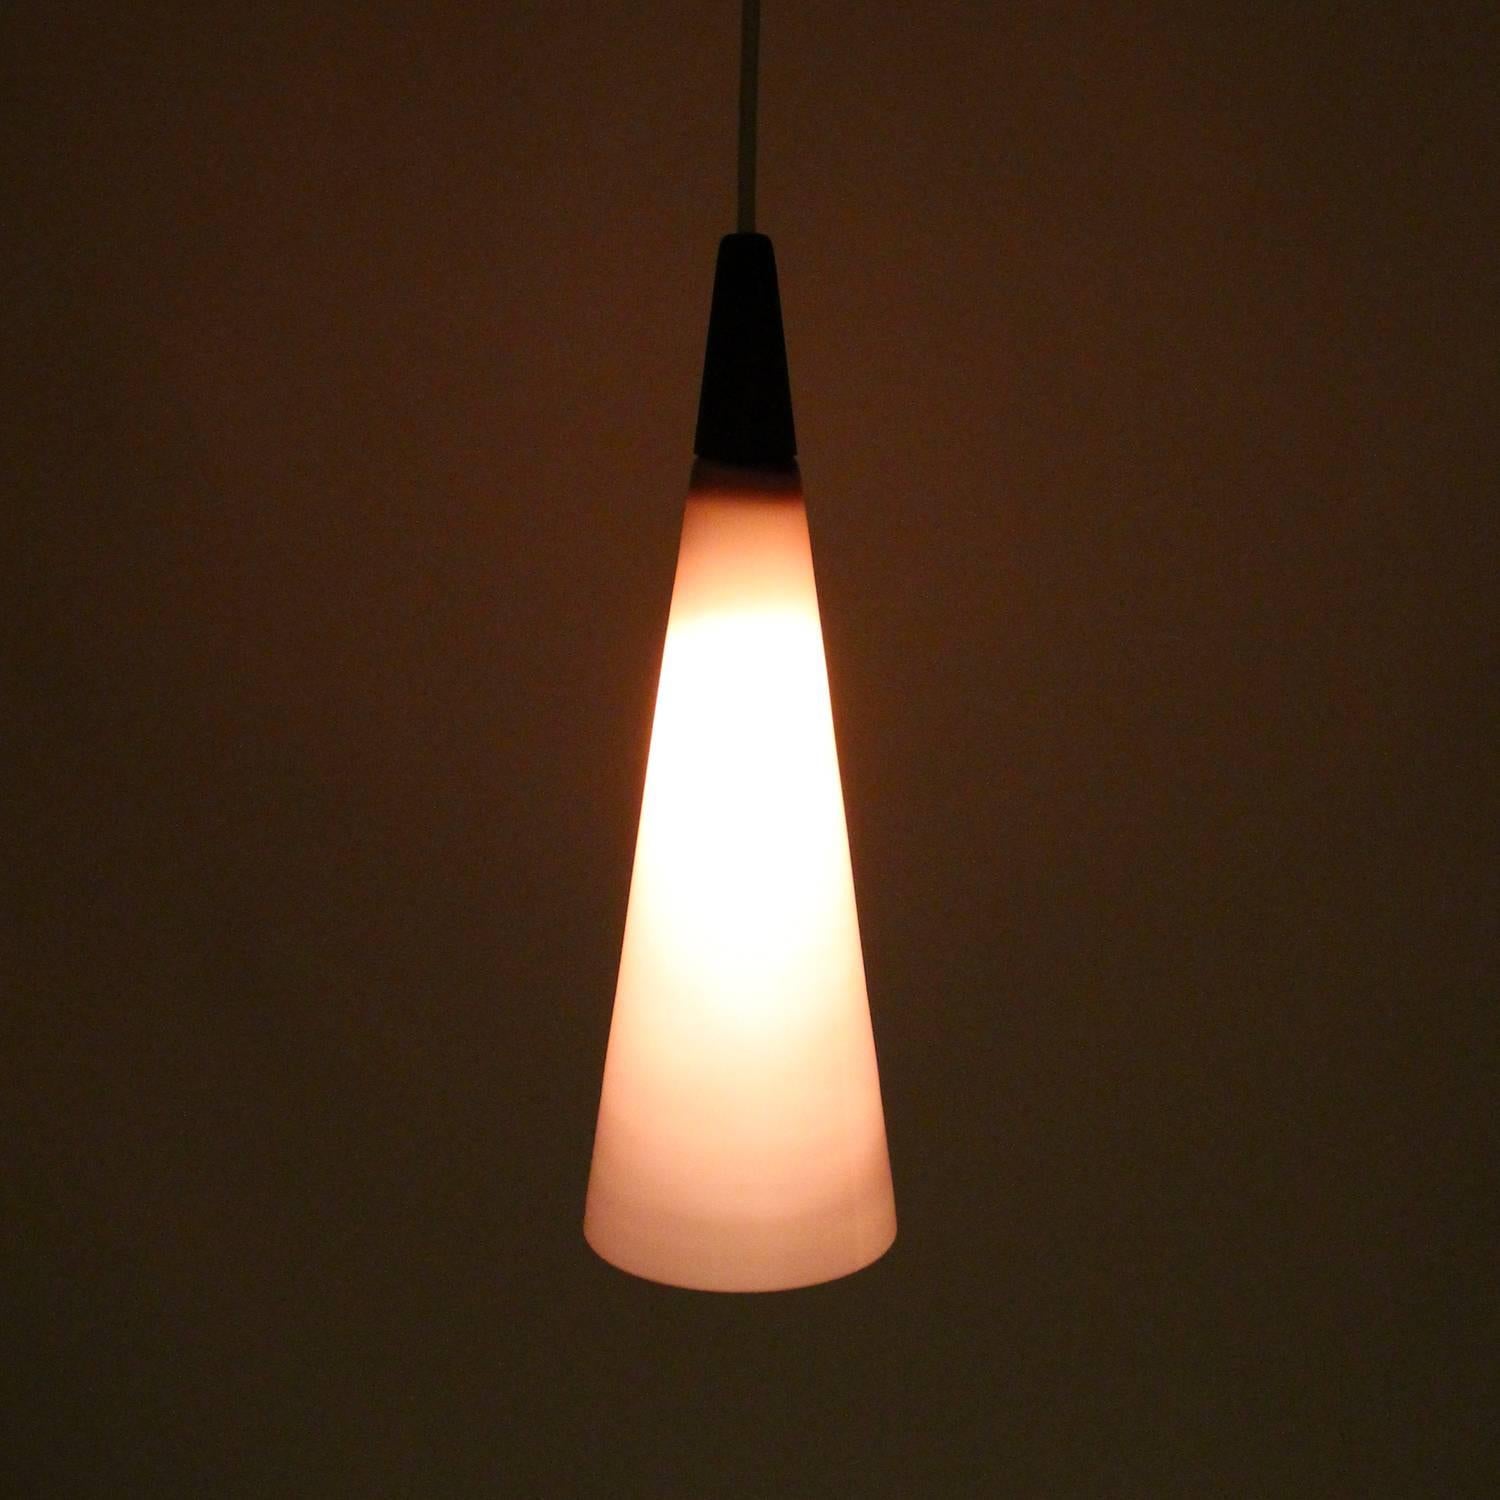 Purple Glass Pendant Light with Teak Top, 1970s Scandinavian Modern Hanging Lamp For Sale 1